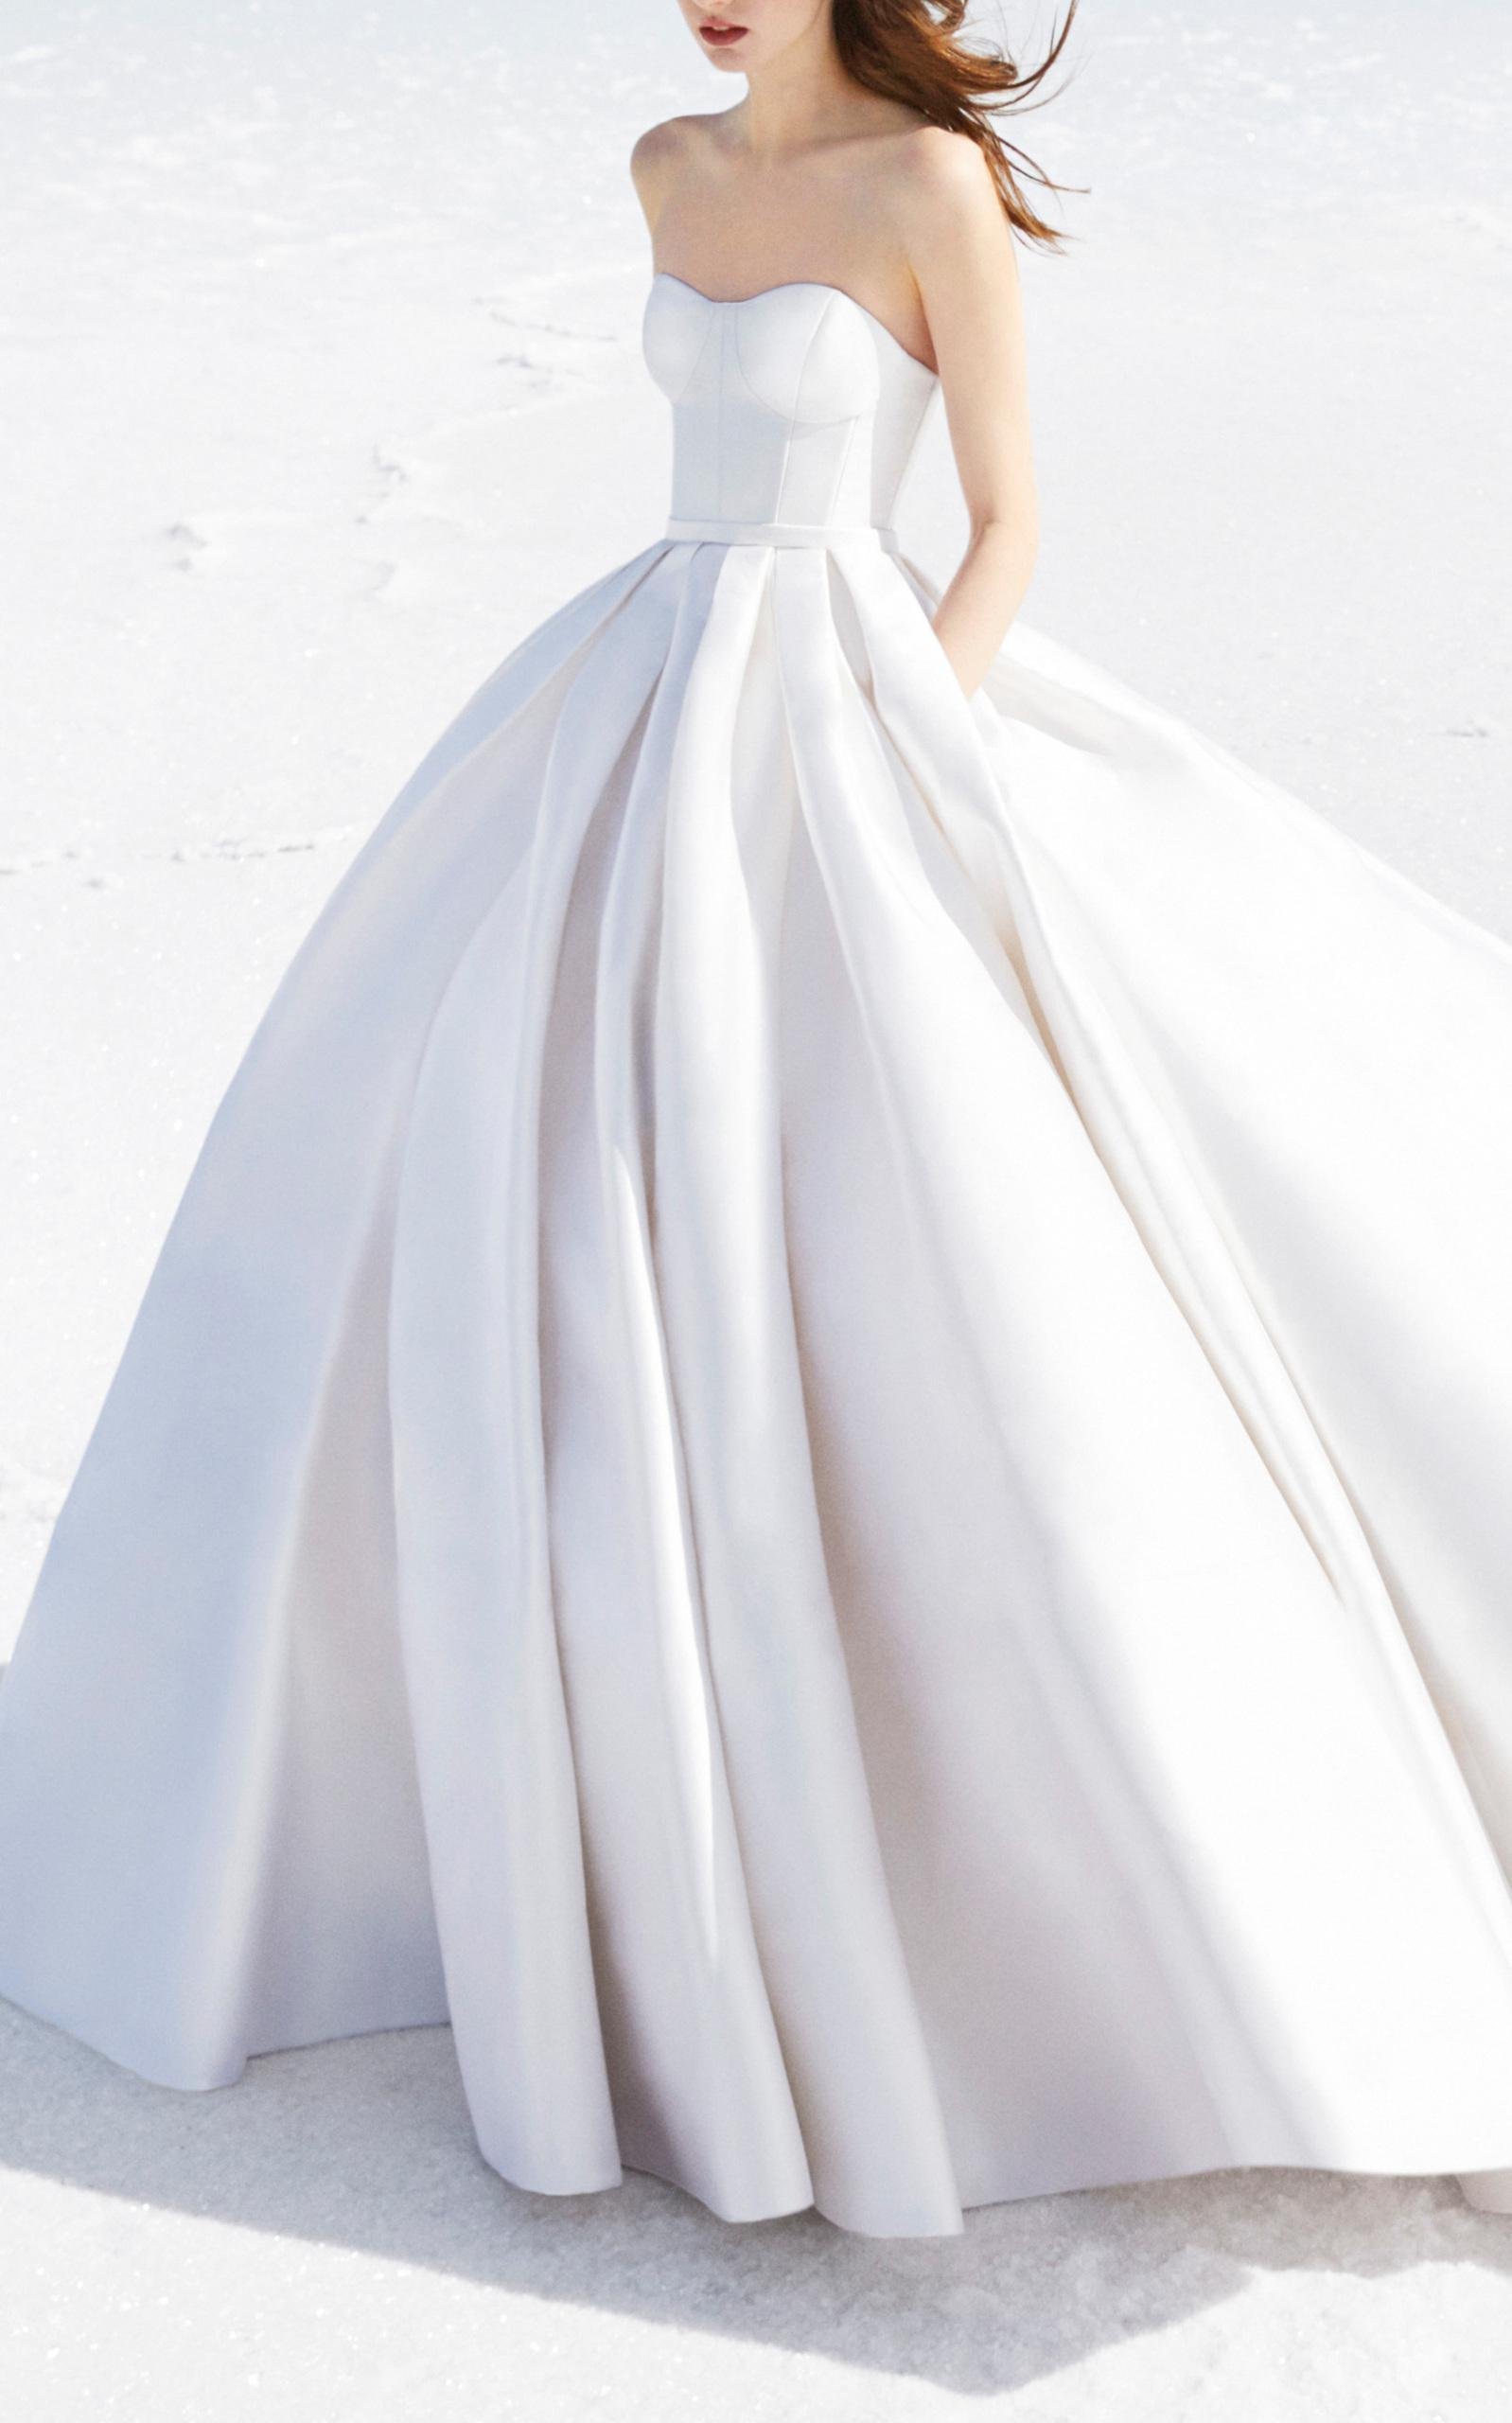 alex-perry-bride-white-Scarlette-Strapless-Corset-Gown.jpeg